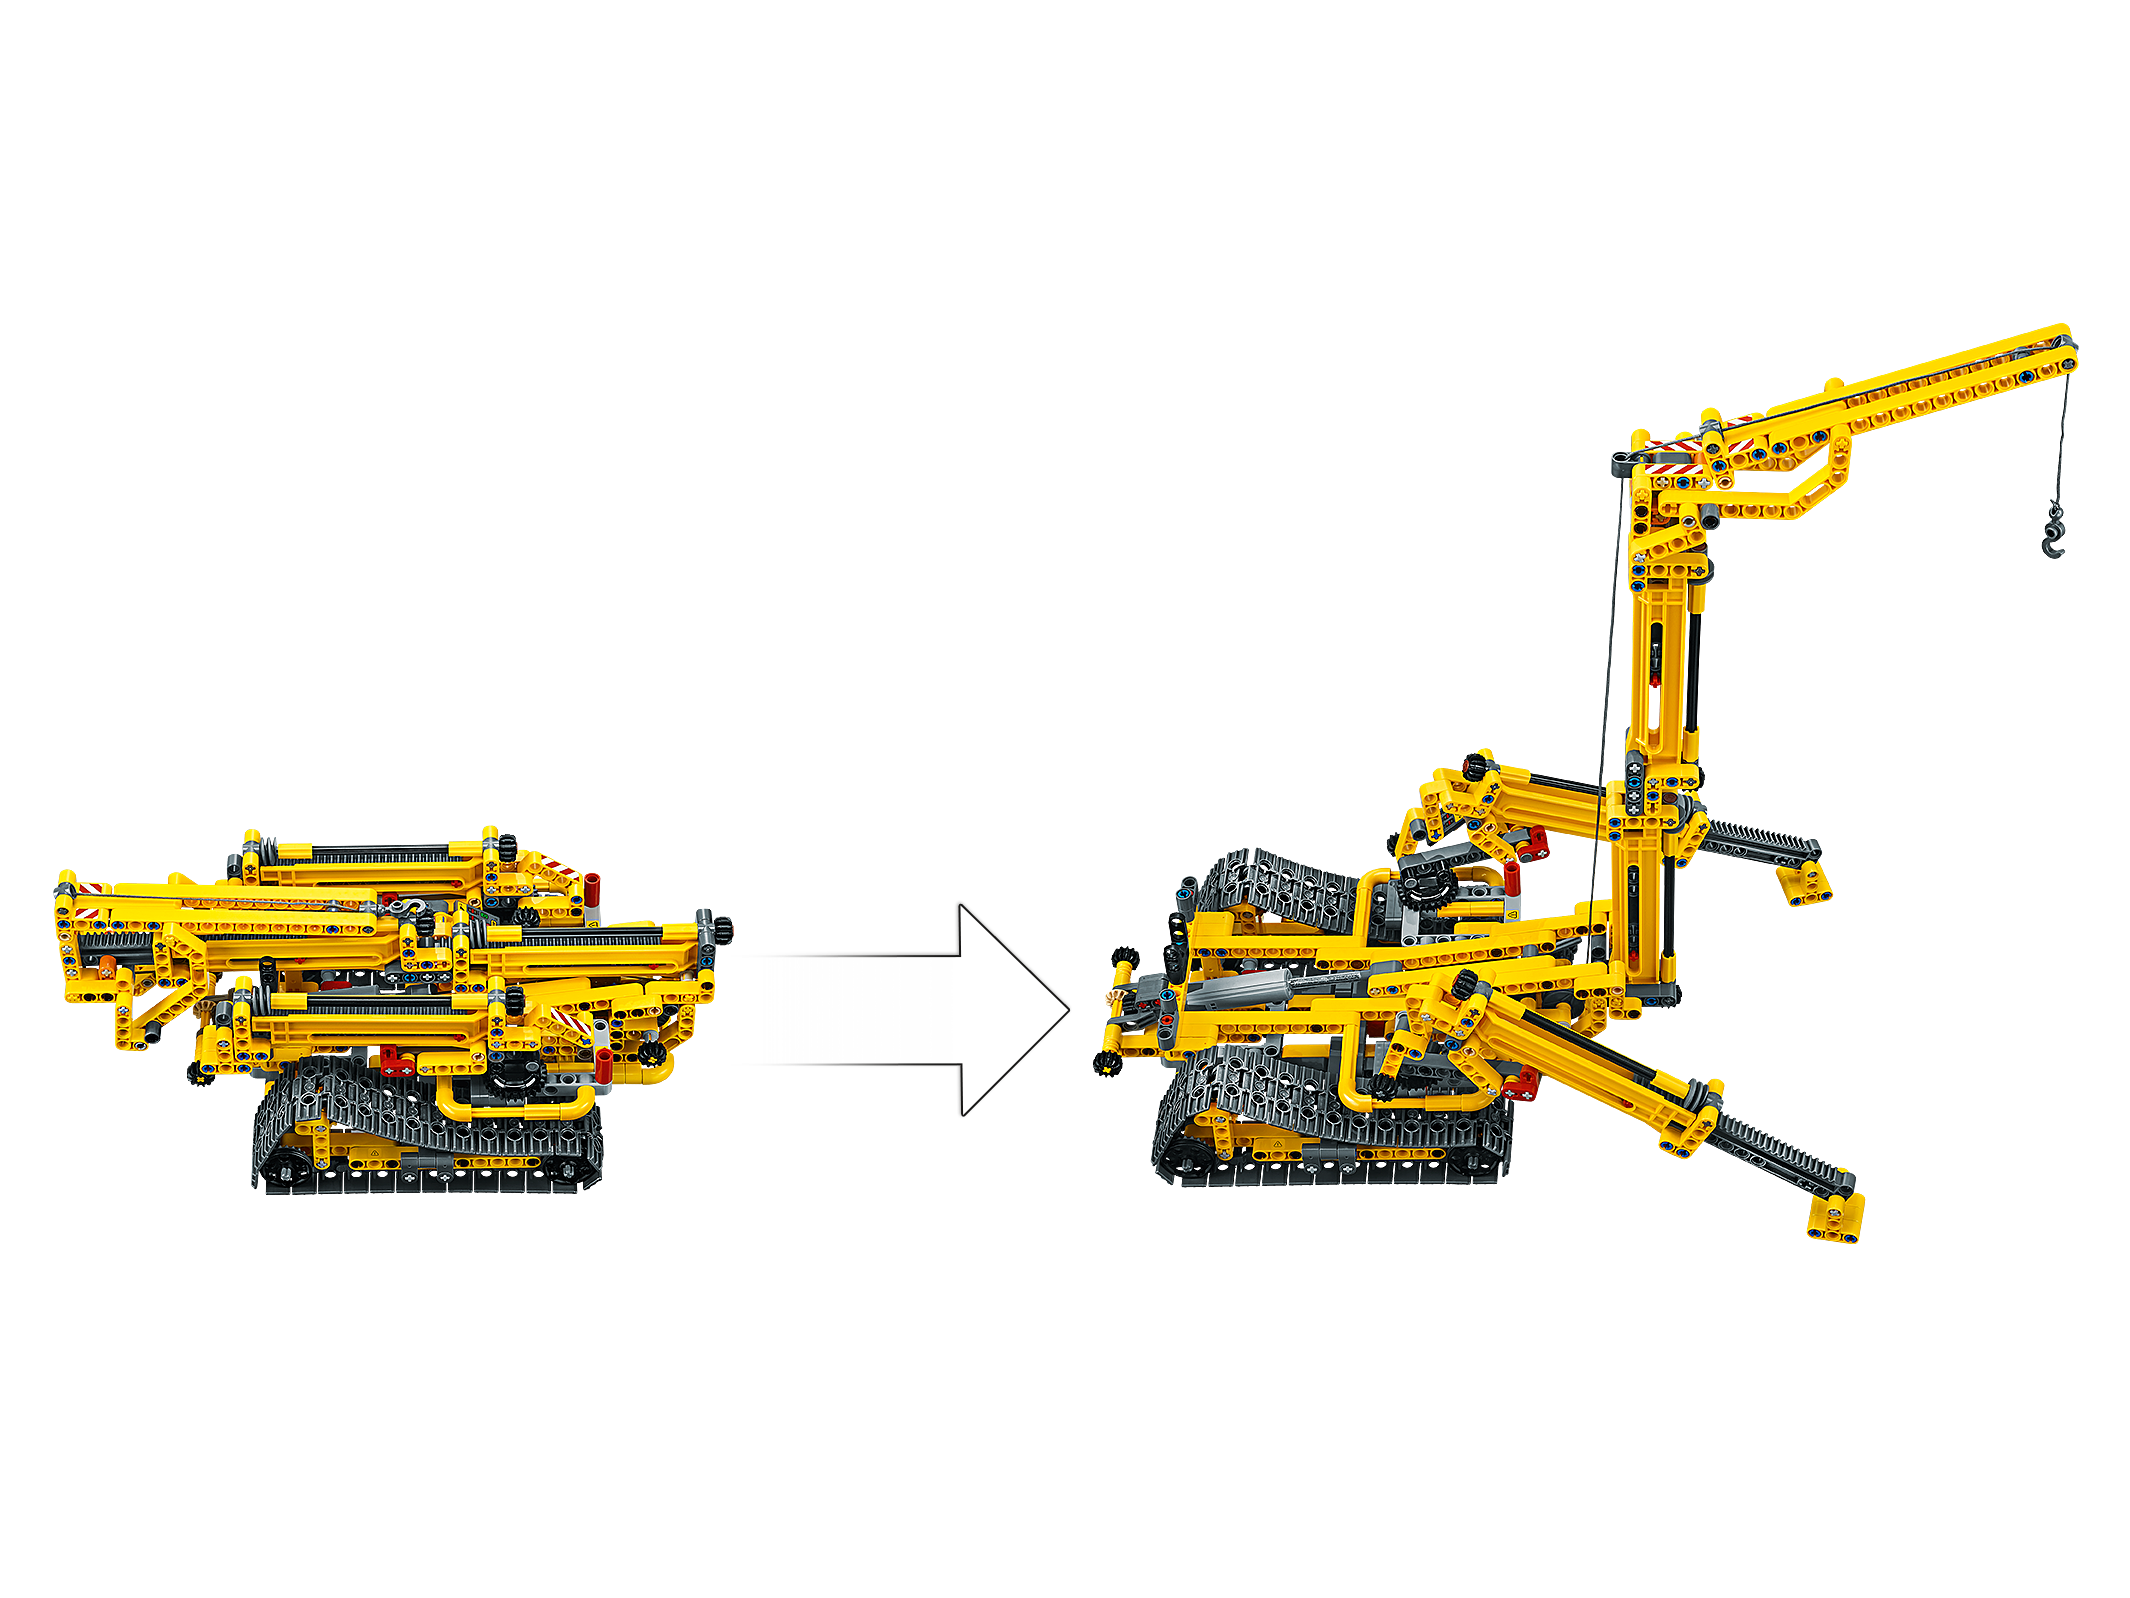 Lego Technic 42097 Compact Crawler Crane Review » Lego Sets Guide